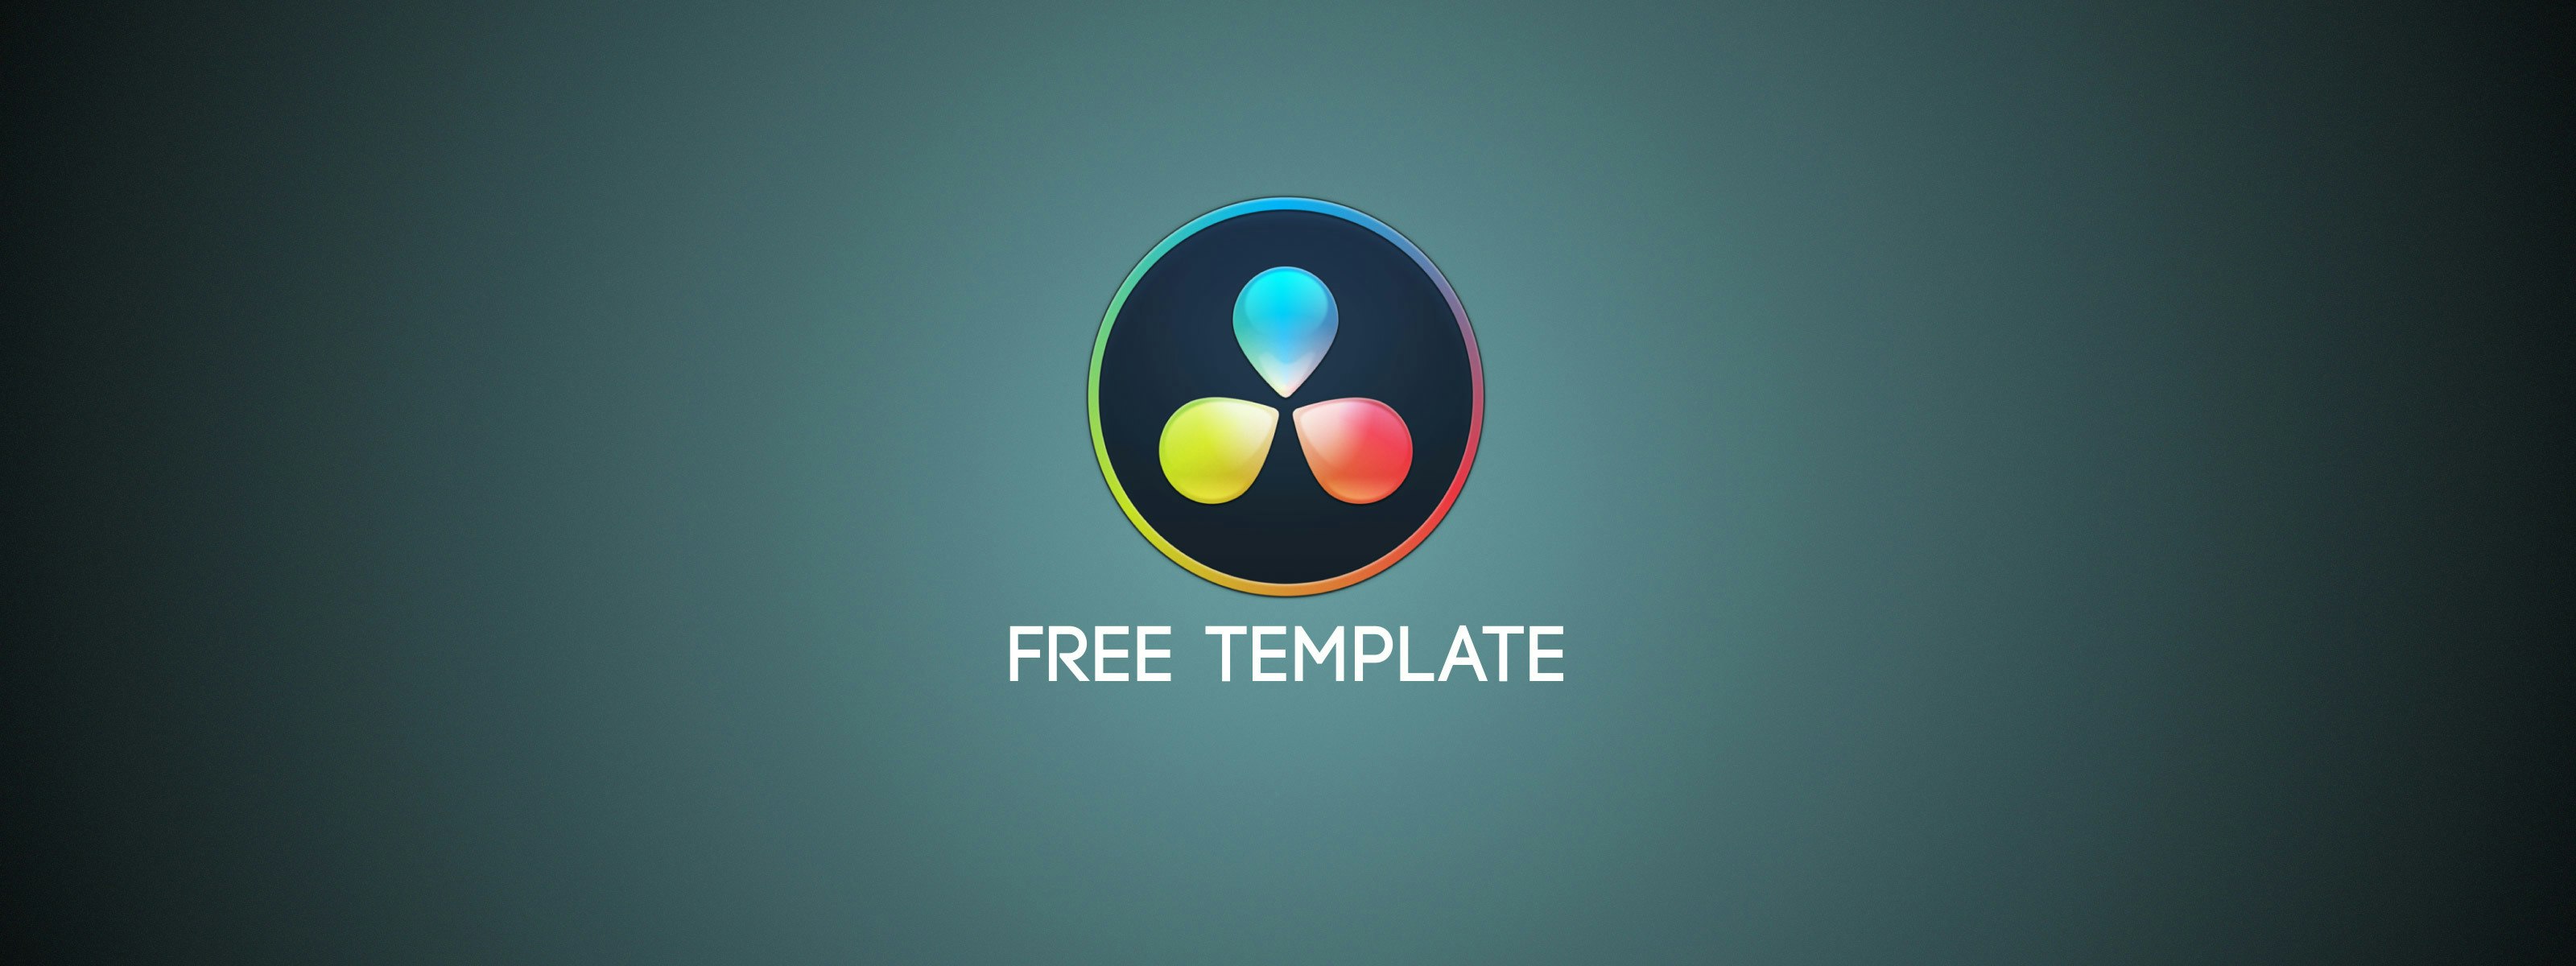 template-davinci-resolve-free-printable-templates